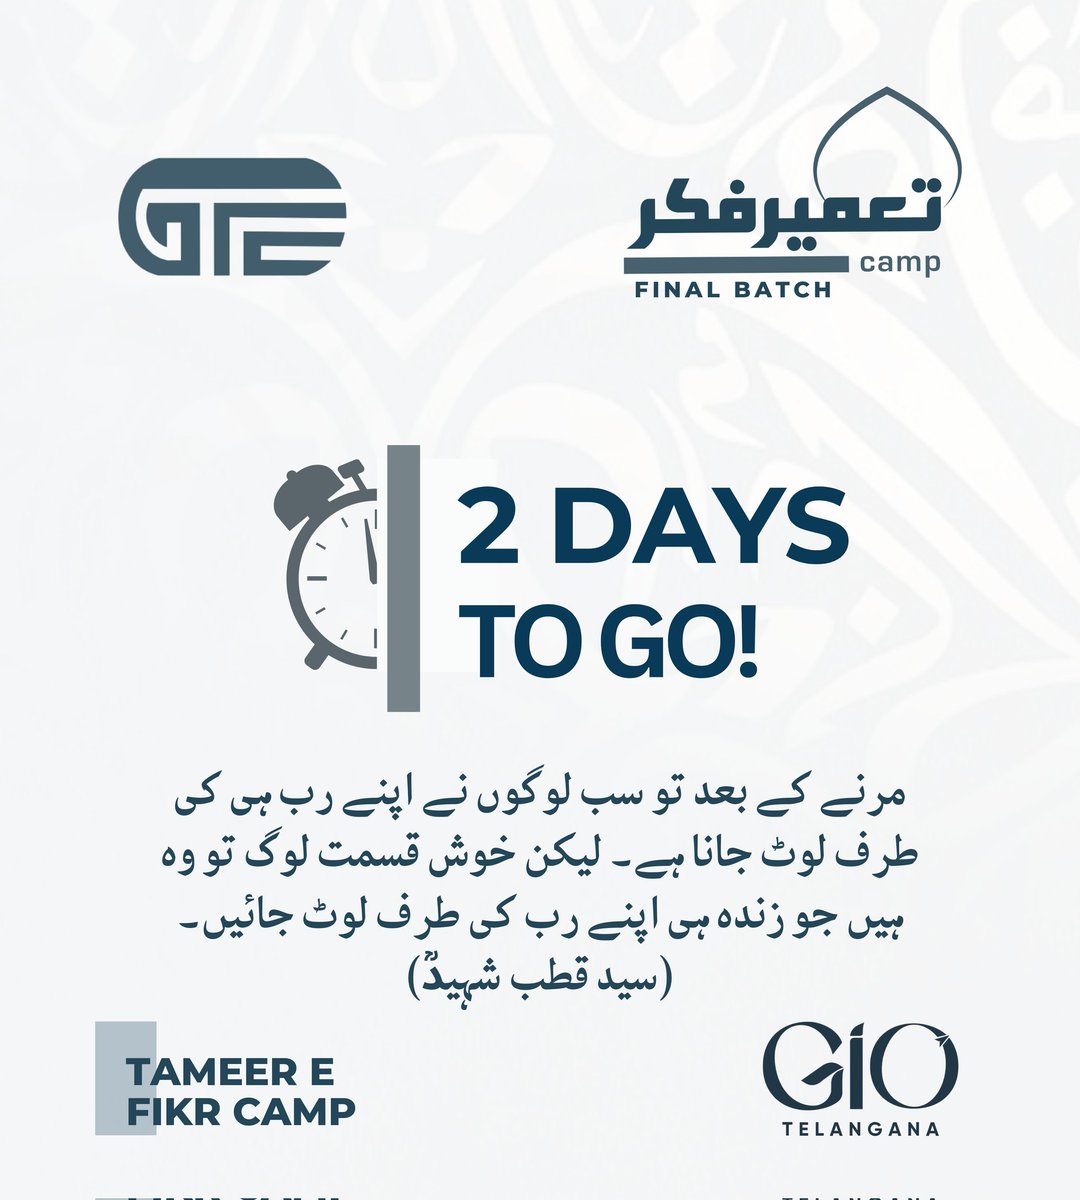 2 Days To Go! ✨ Tameer e Fikre Camp - Final Batch #TameereFikrCamp #GIOTelangana